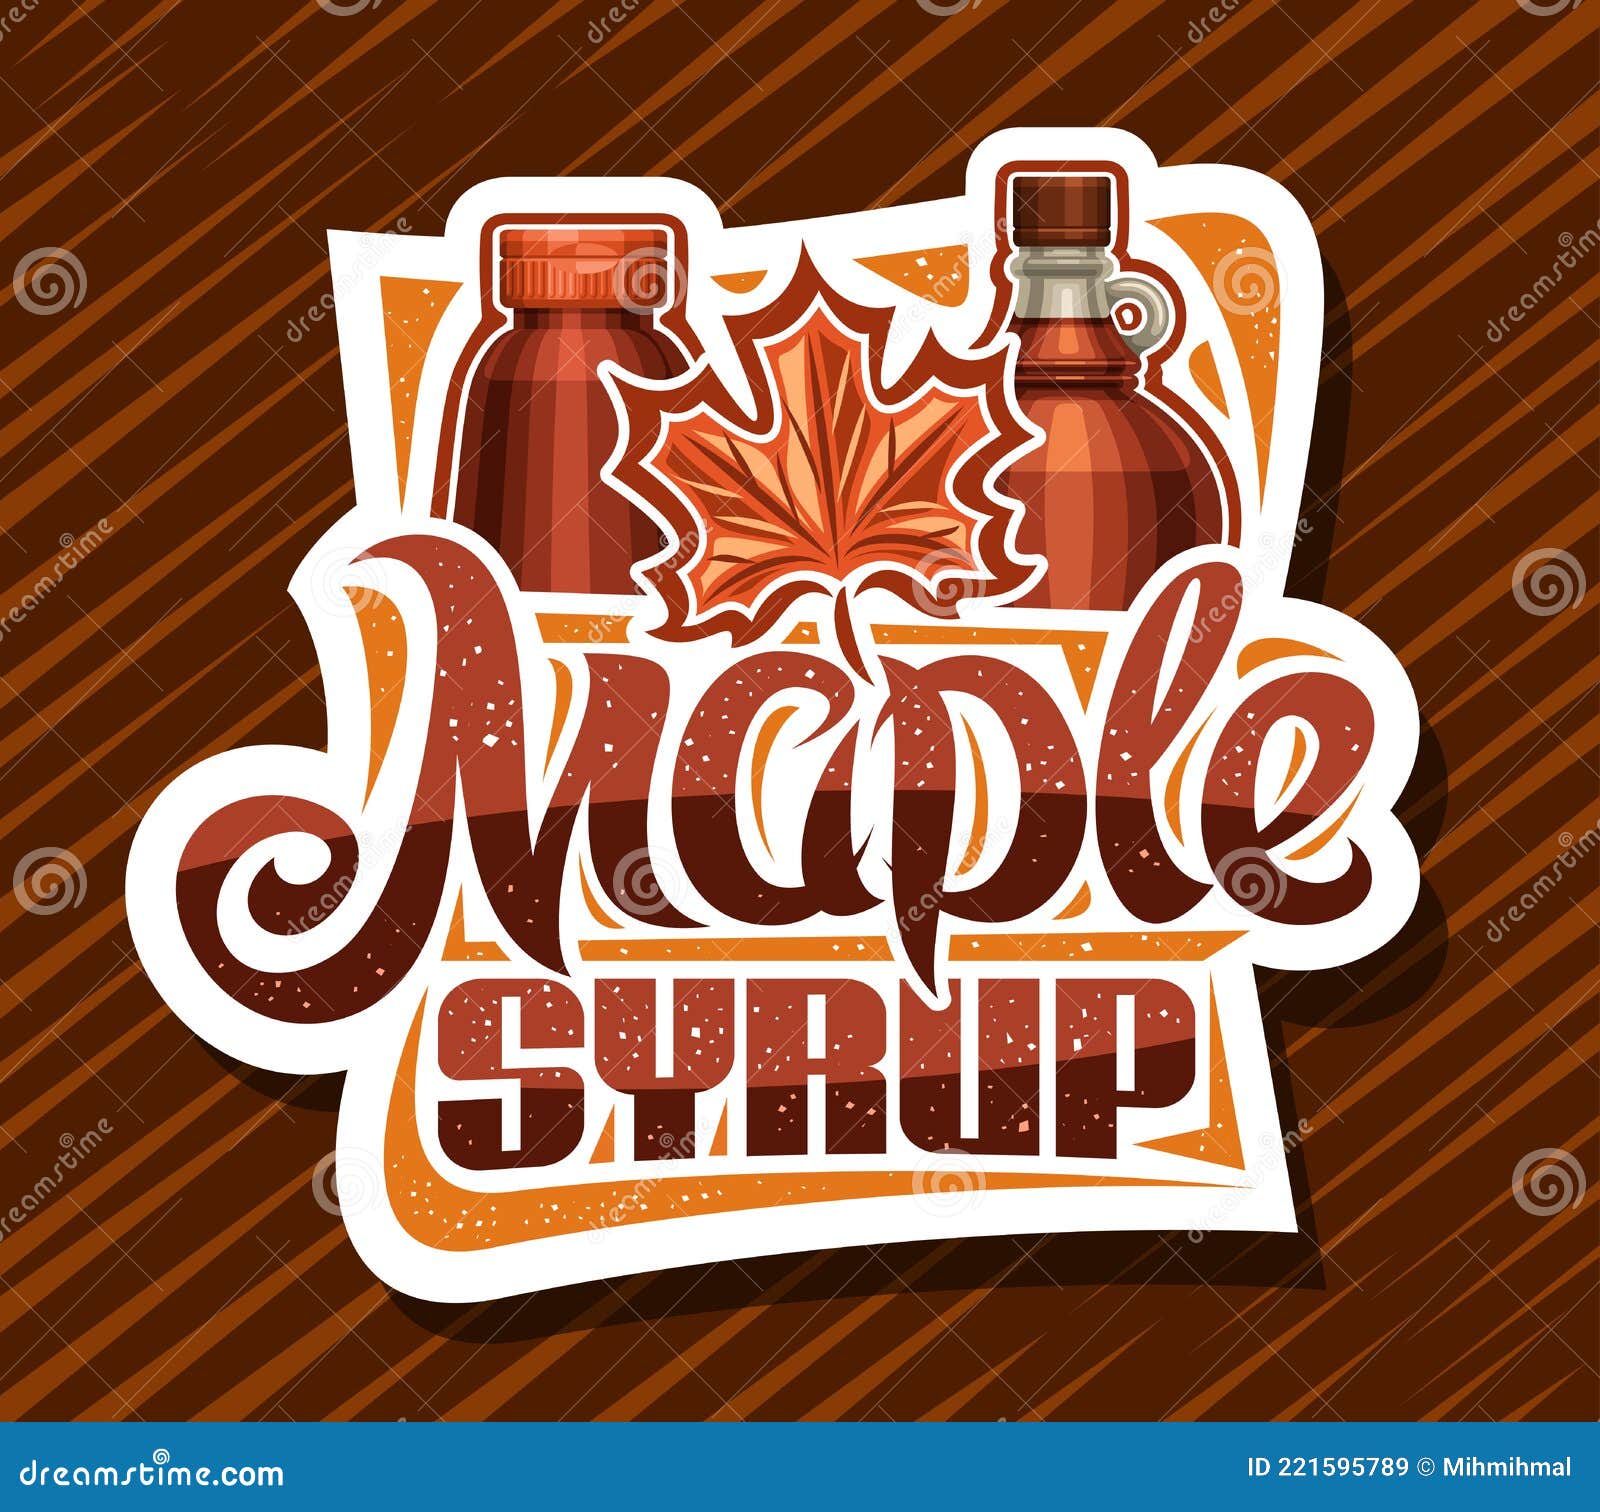 maple syrup logo ideas 3